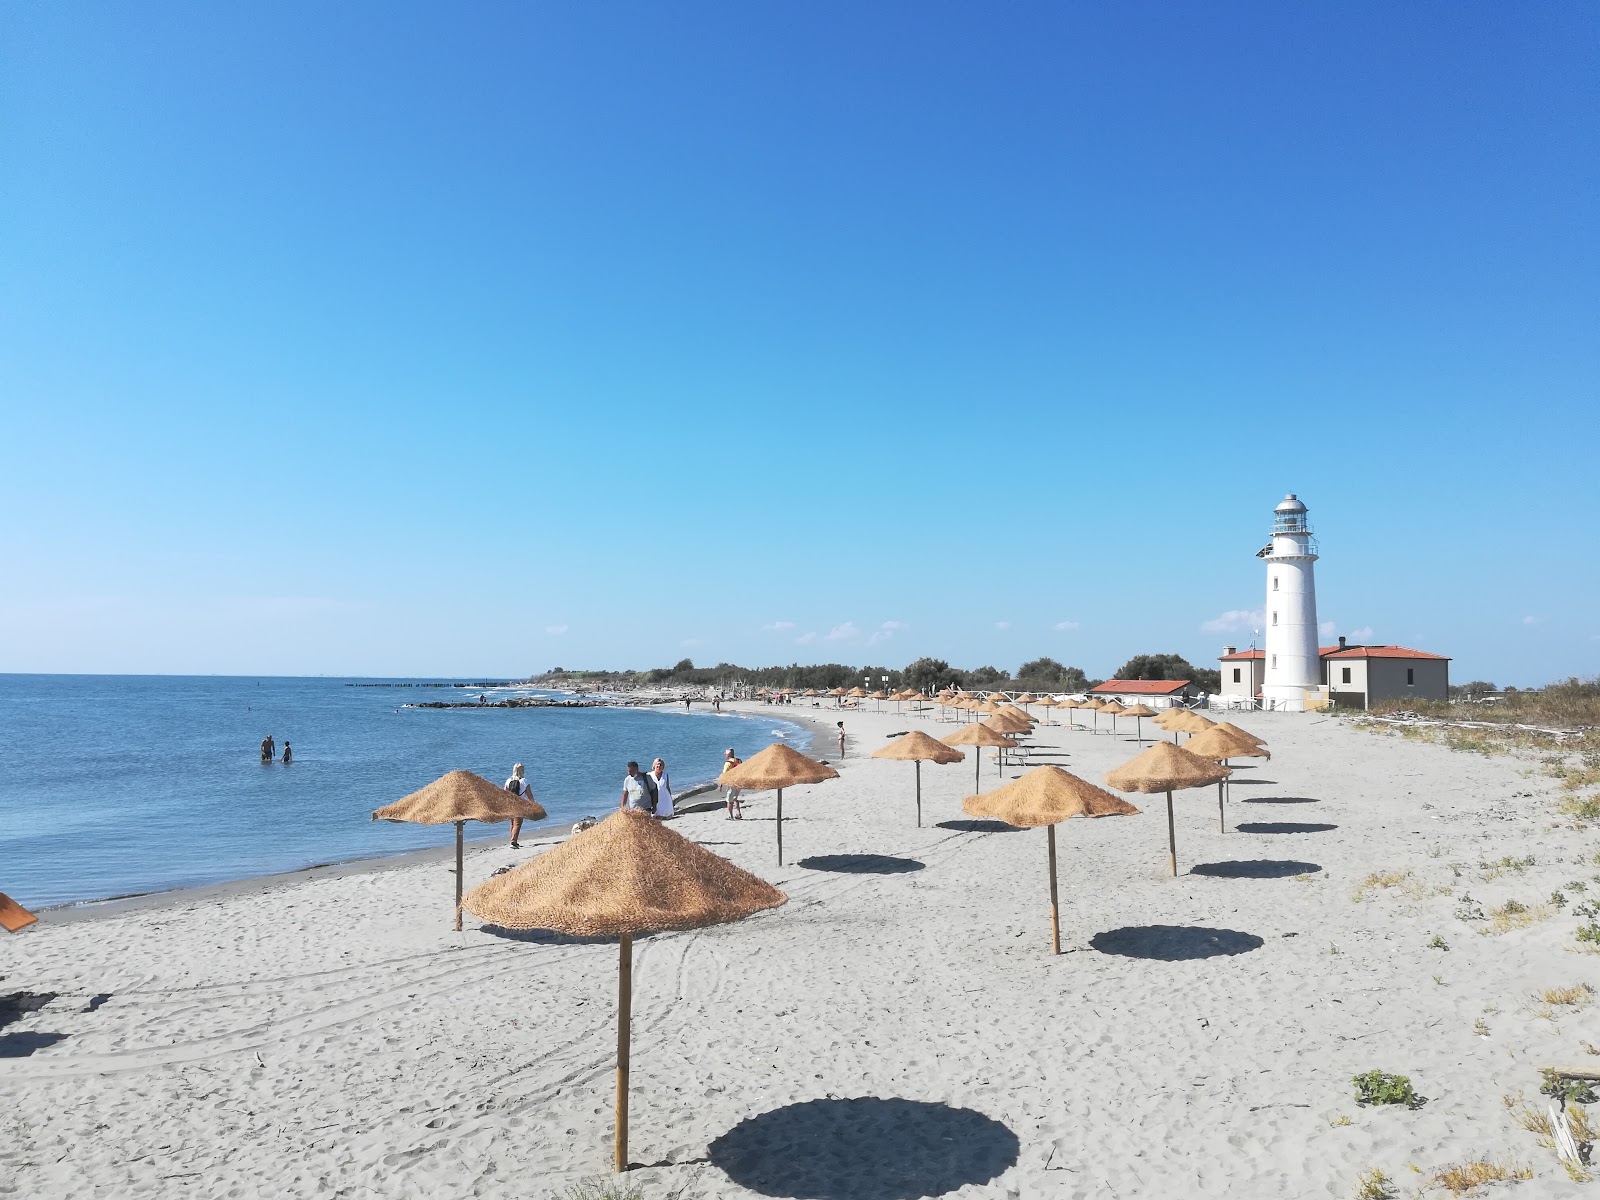 Foto de Spiaggia dell'Isola dell'Amore com areia brilhante superfície